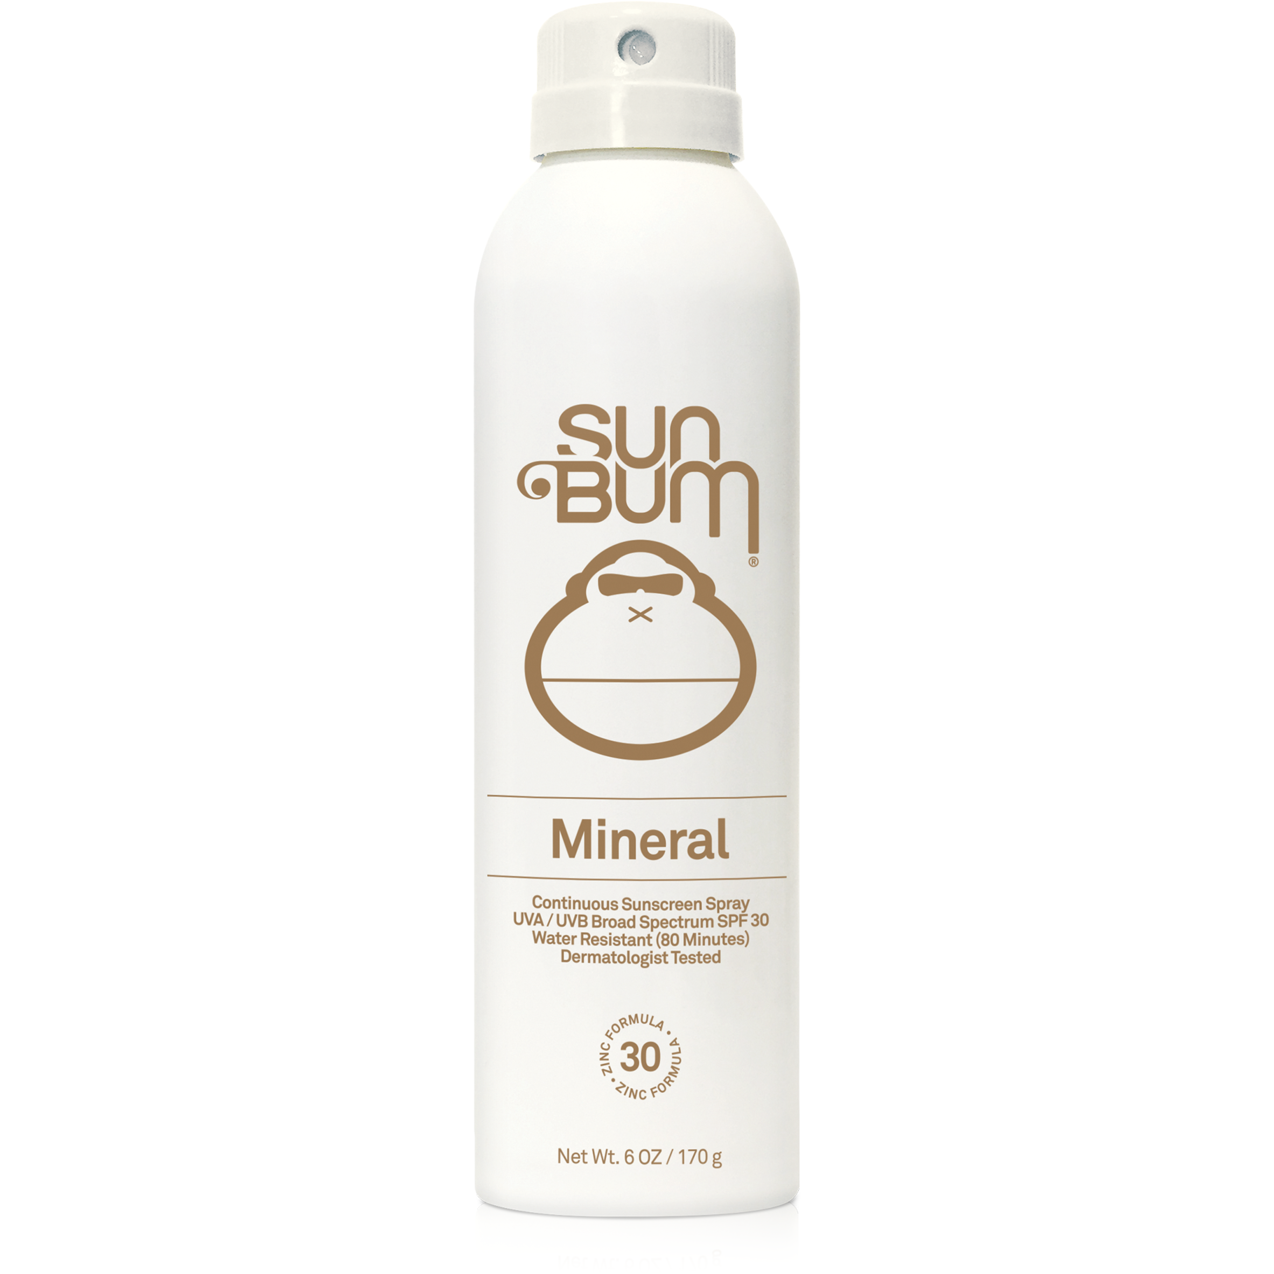 Sun Bum Mineral SPF 30 Sunscreen Spray - 6oz